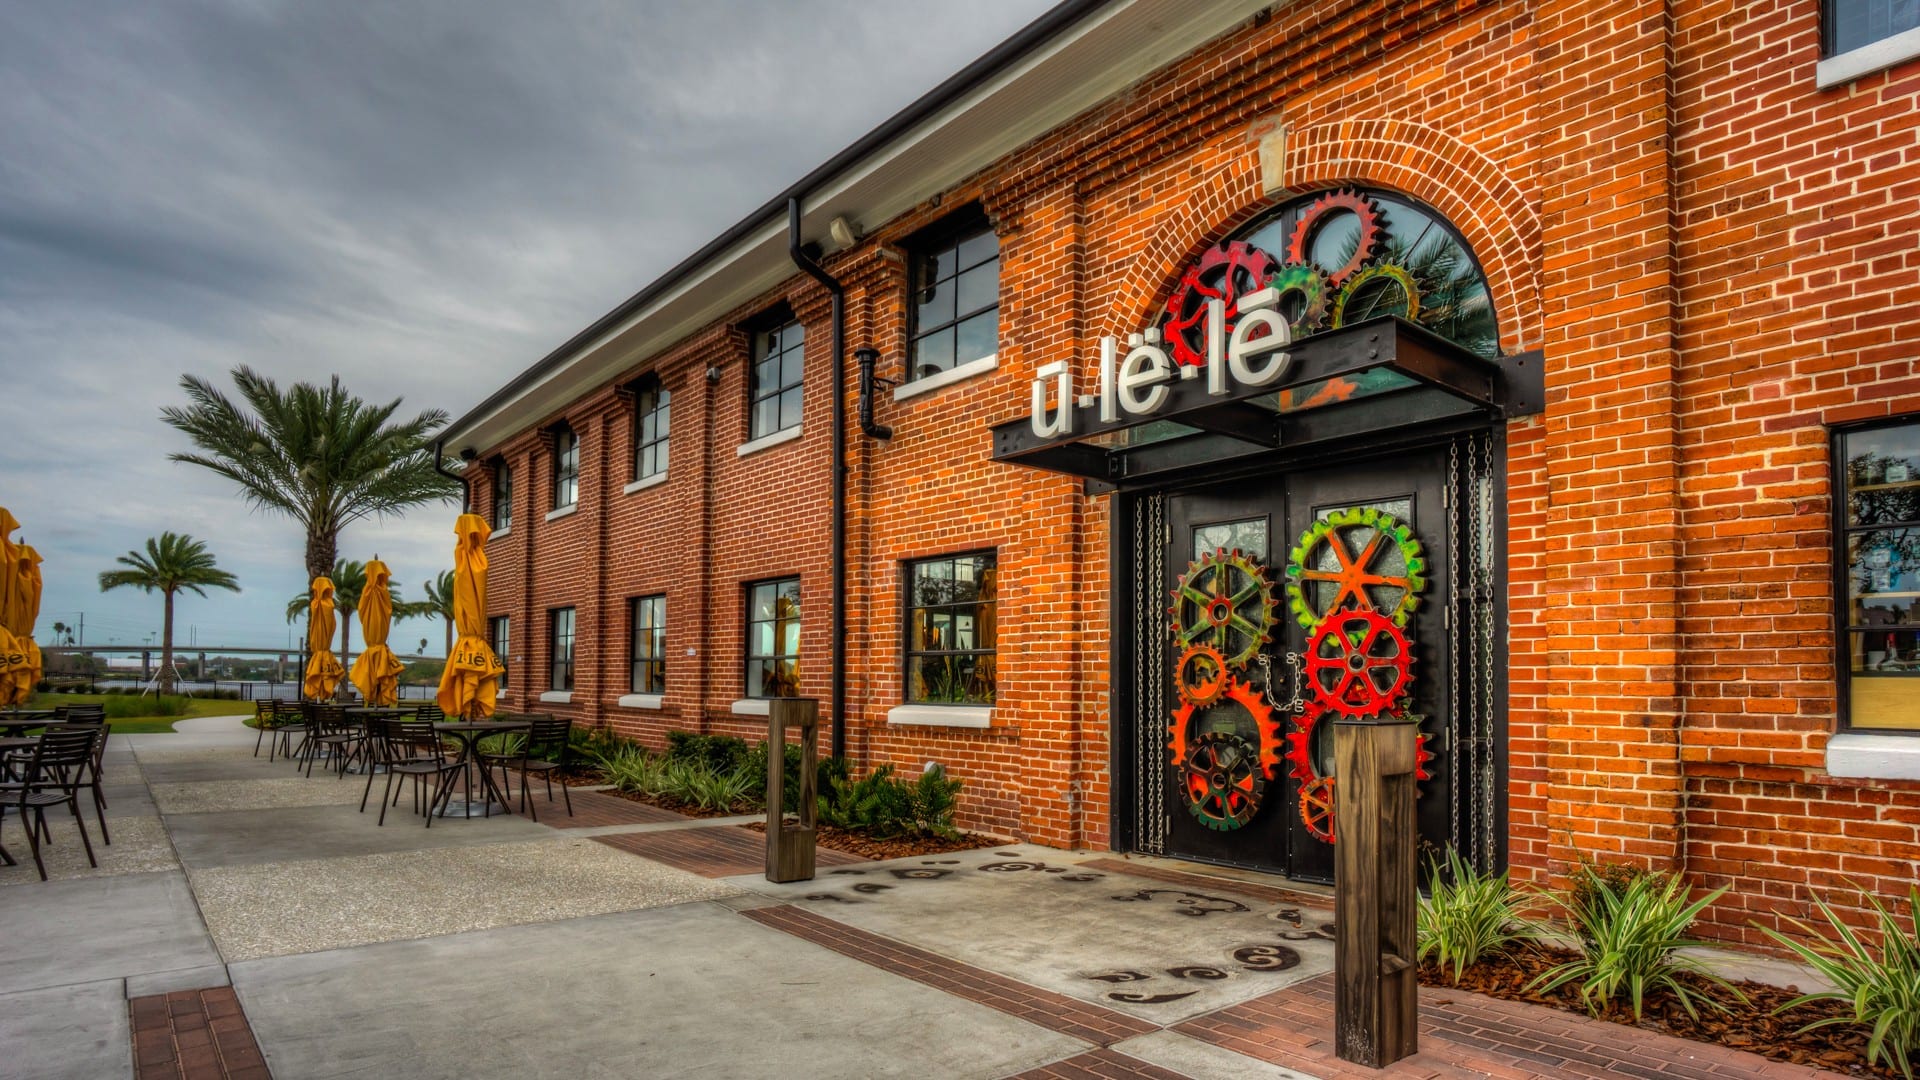 Ulele – Tampa Restaurant Dmitry Bubis Photographer And Content Creator